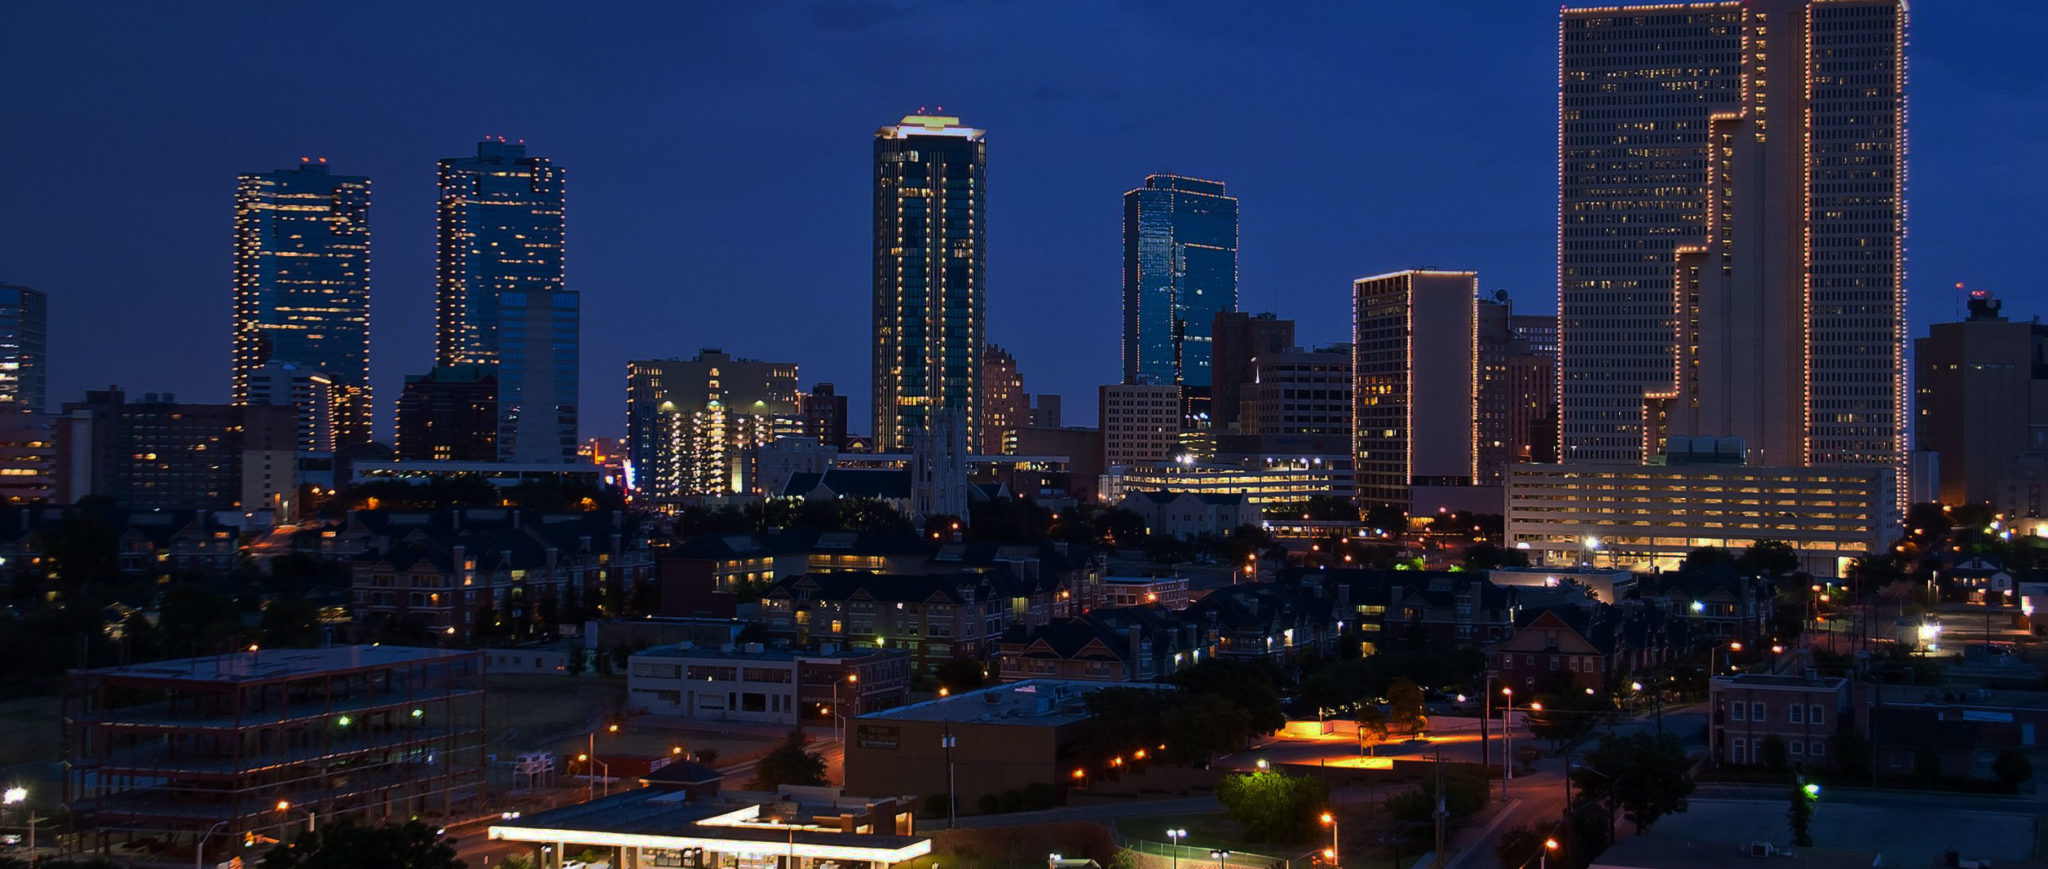 skyline of Dallas/Fort Worth, Texas